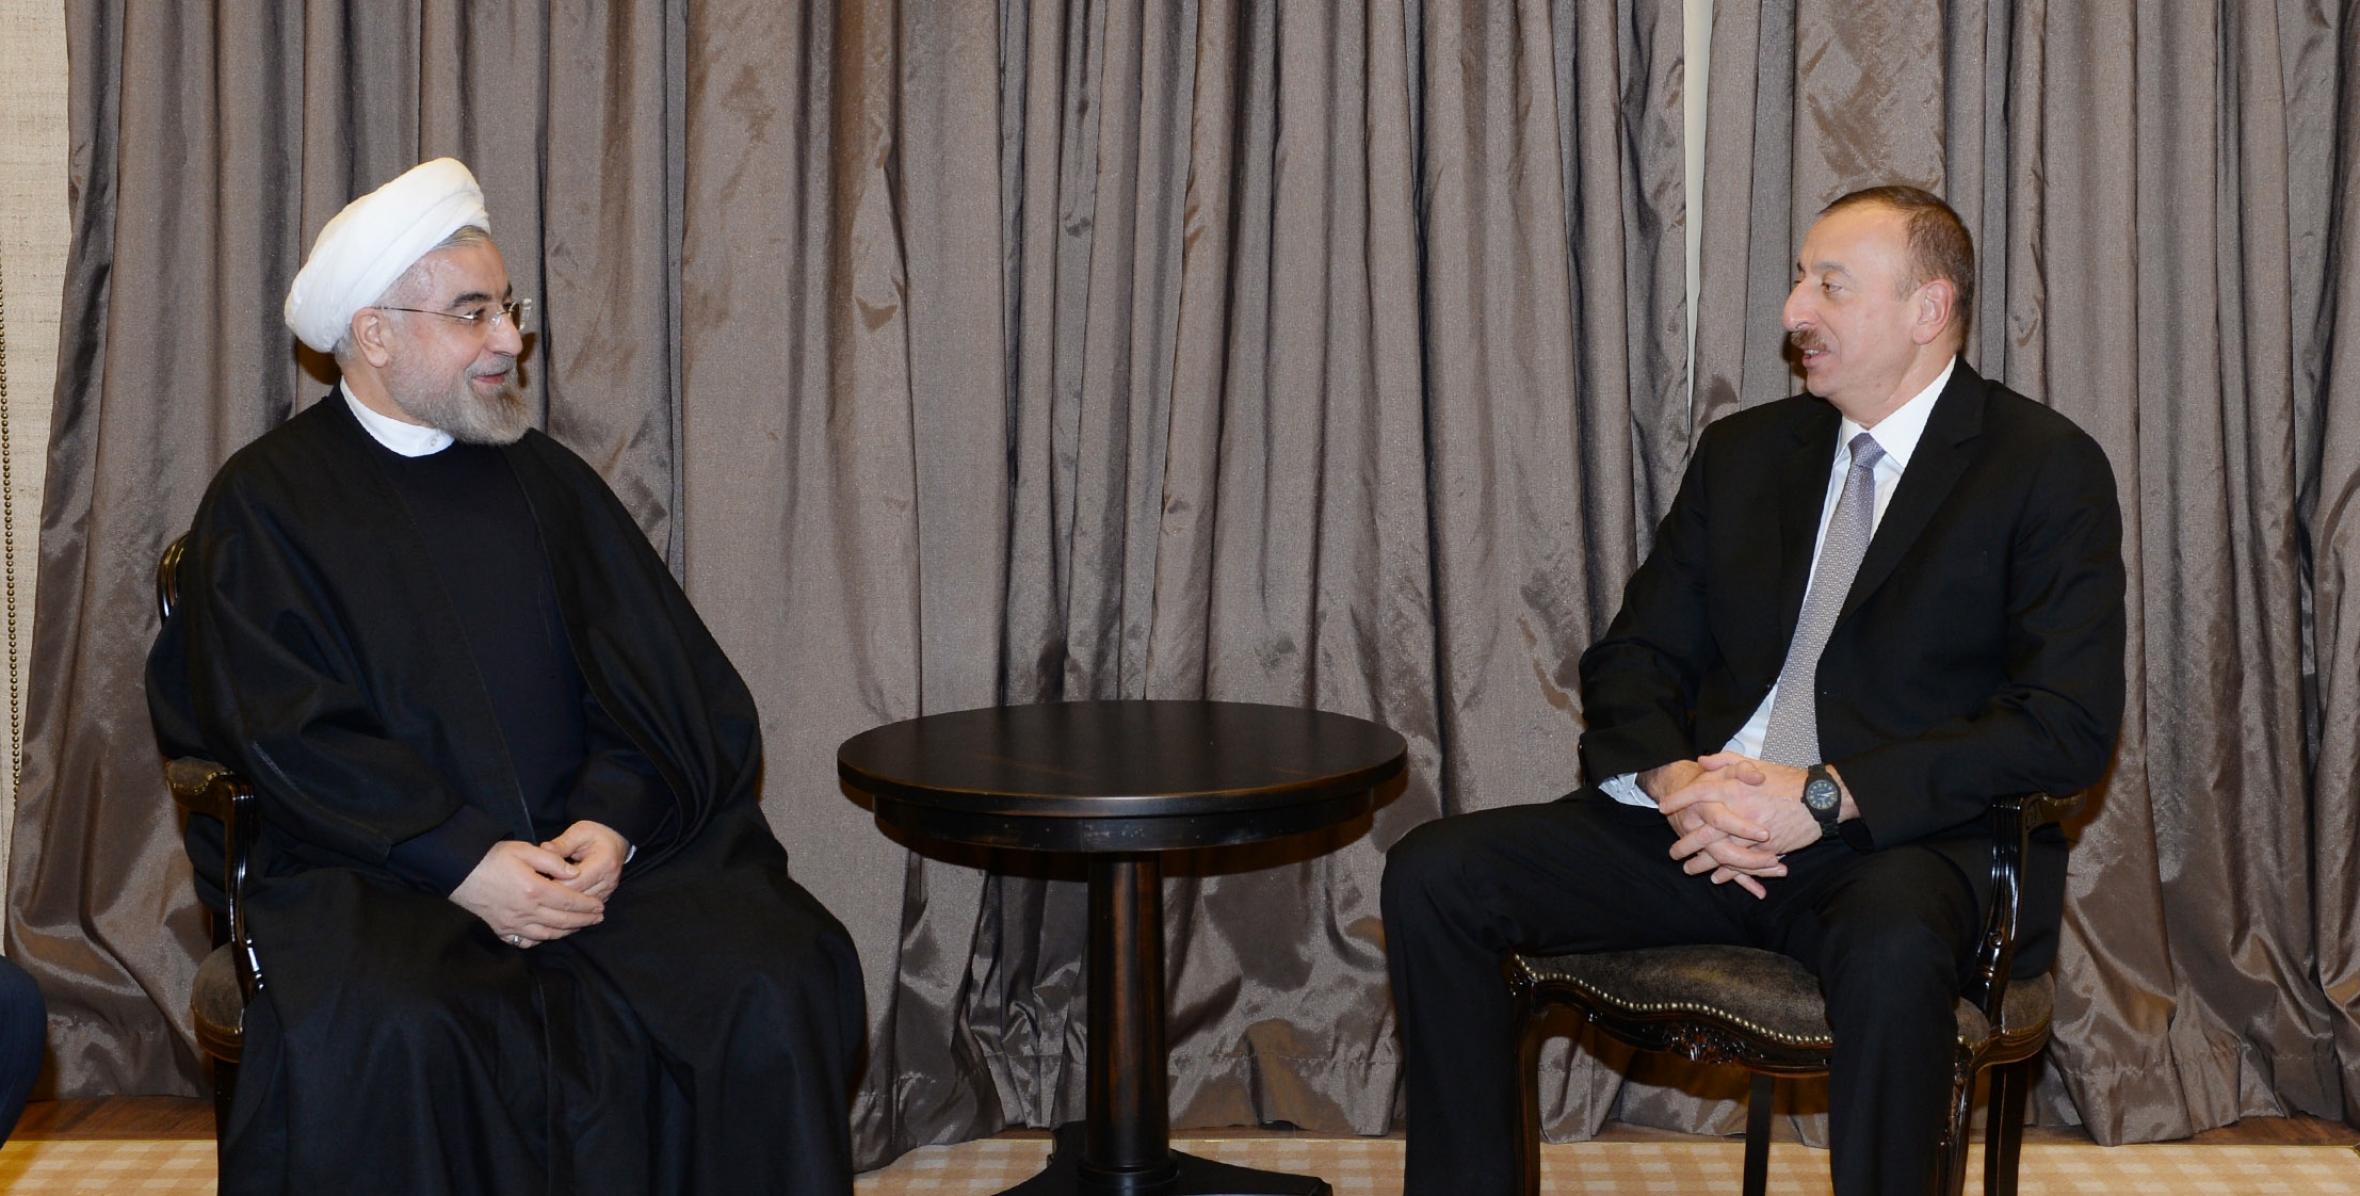 Ilham Aliyev and Iranian President Hassan Rouhani met